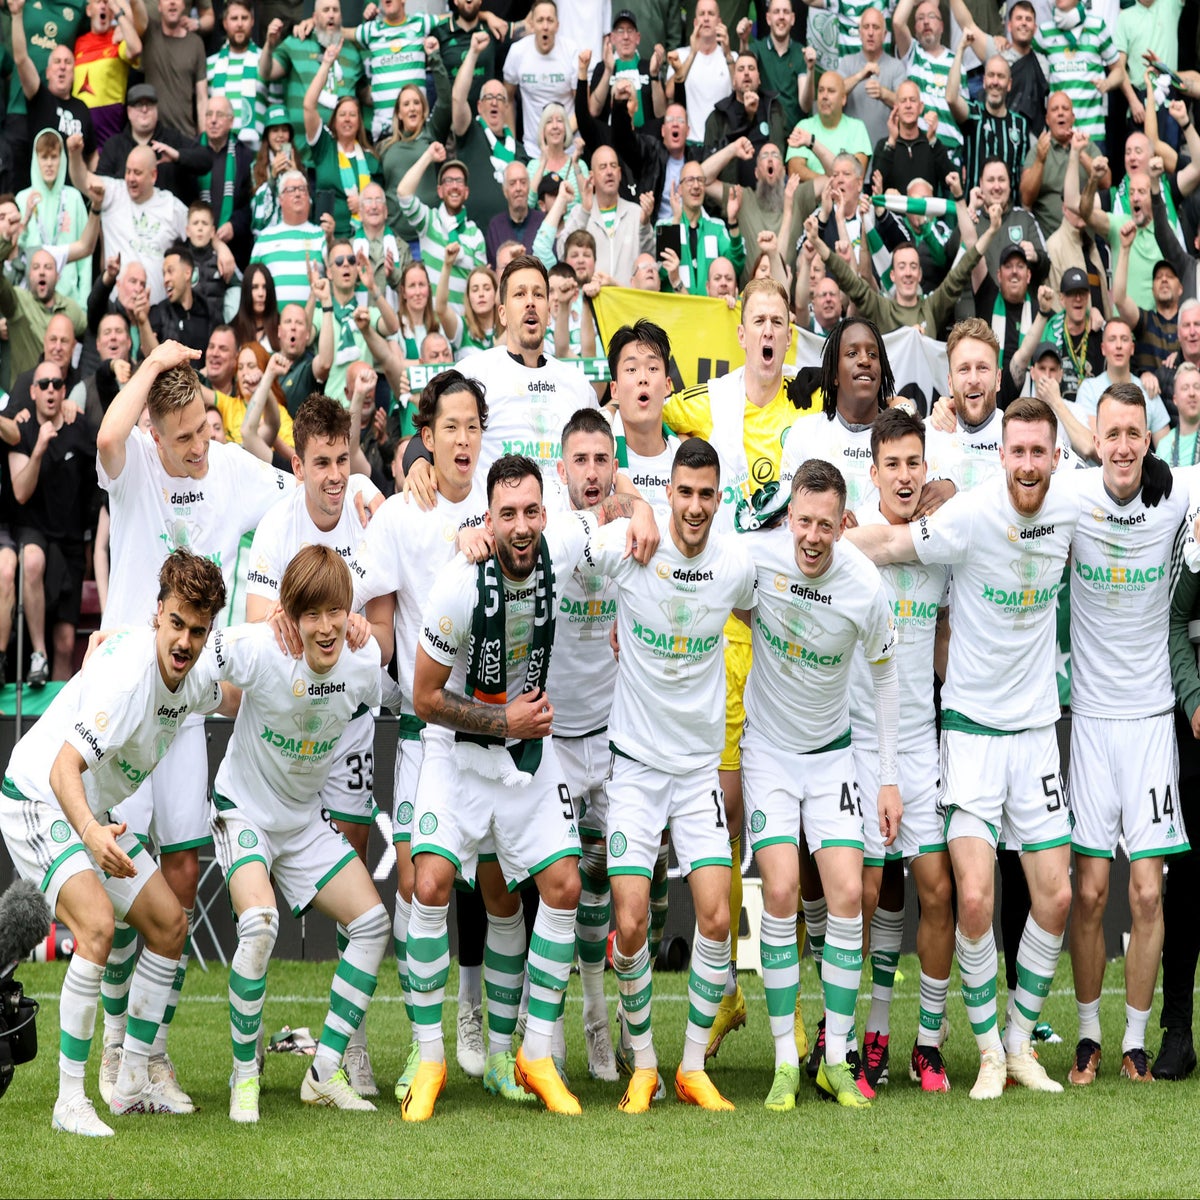 How many Scottish Premiership titles have Celtic won? Total